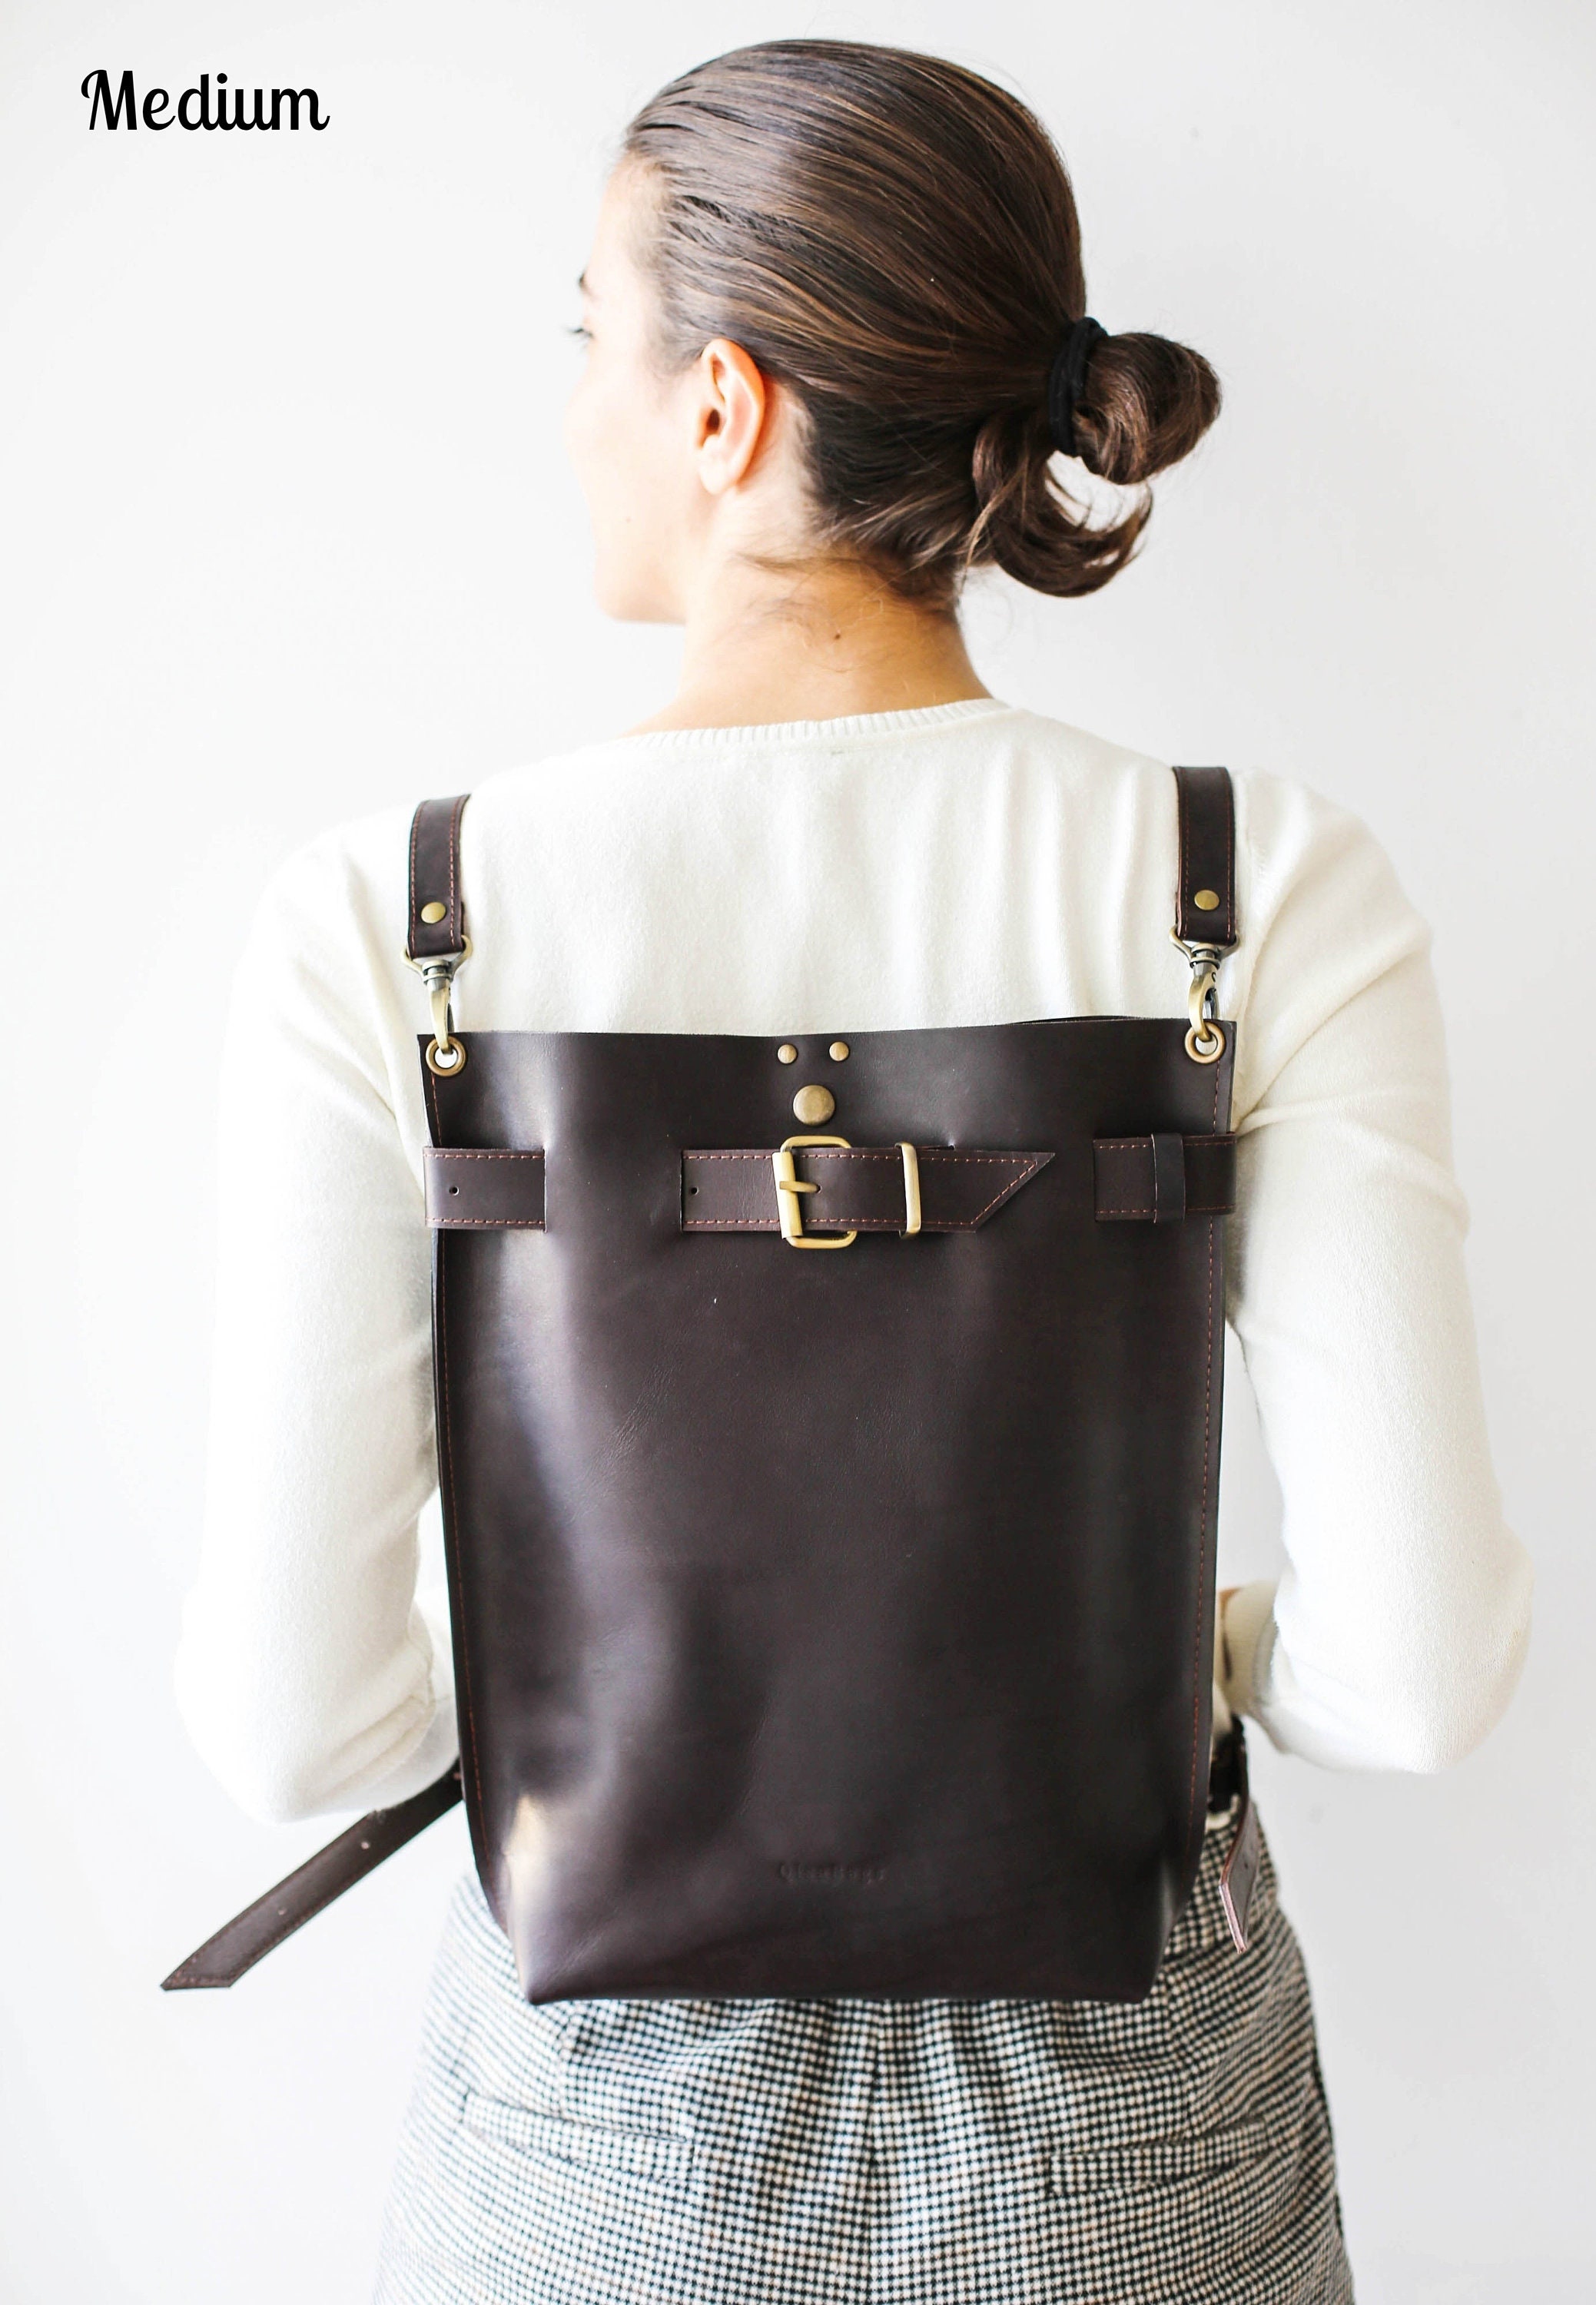 Dark Brown Leather Backpack Women Leather Rucksack Travel | Etsy